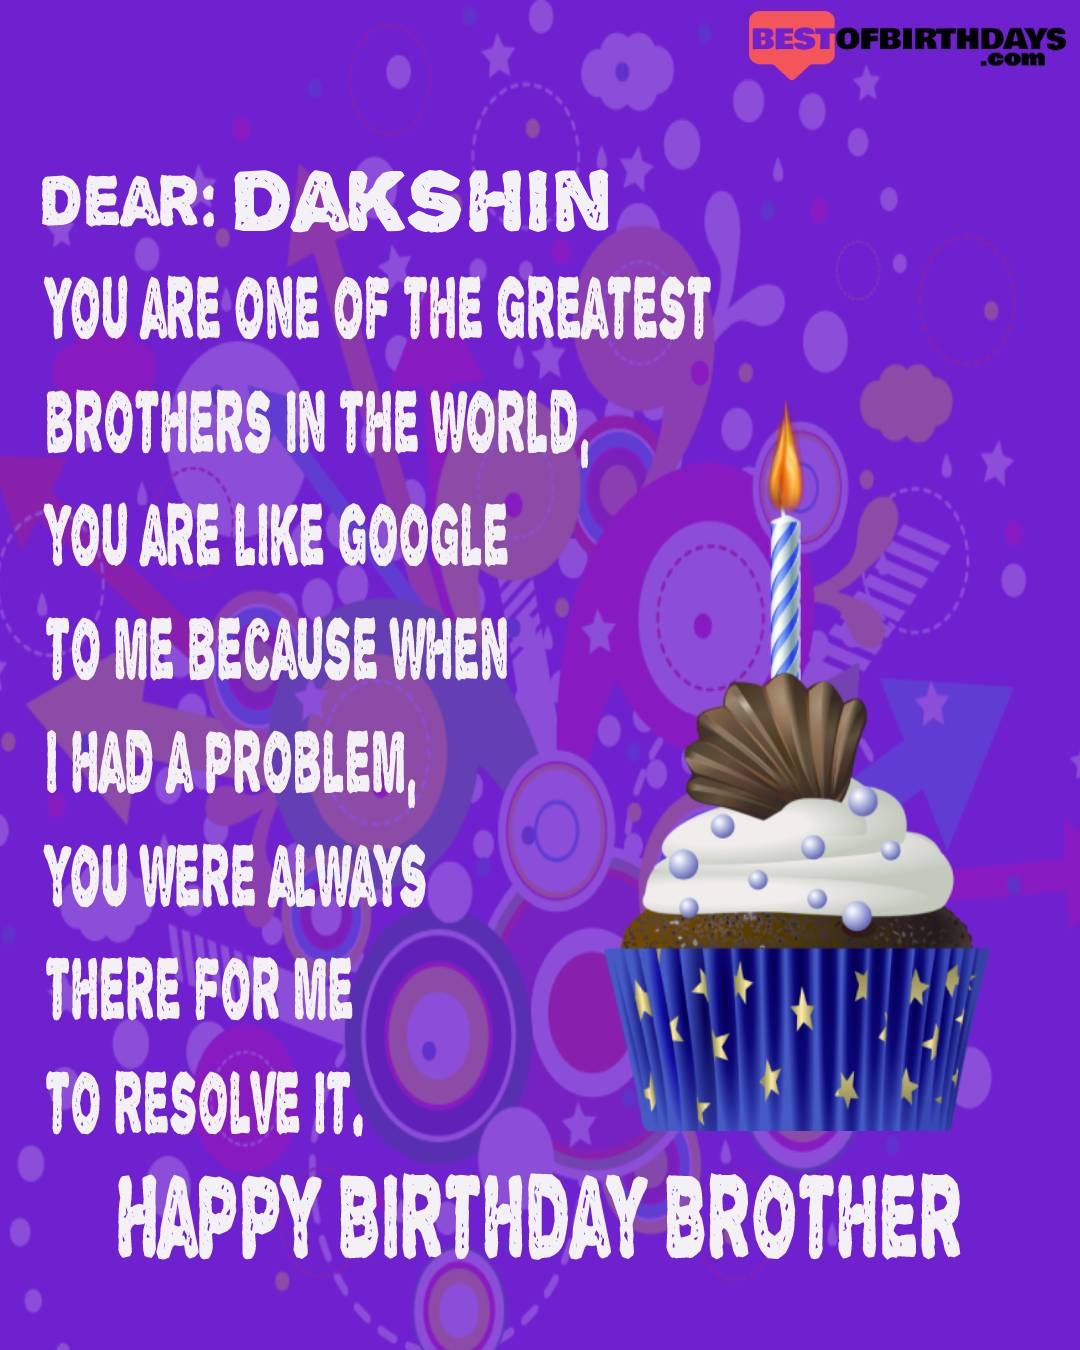 Happy birthday dakshin bhai brother bro